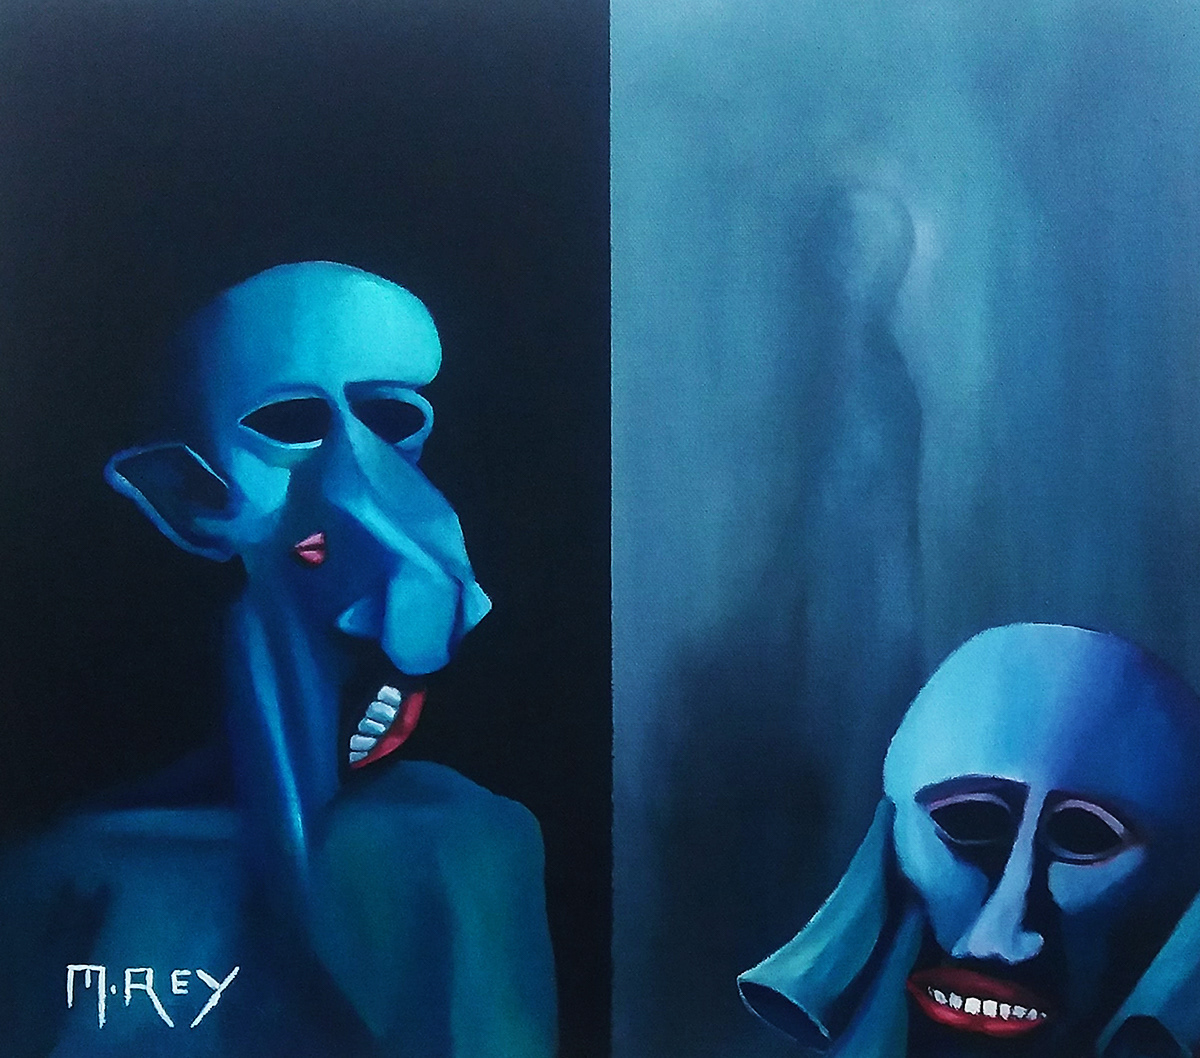 two skull like forms against dark blue background